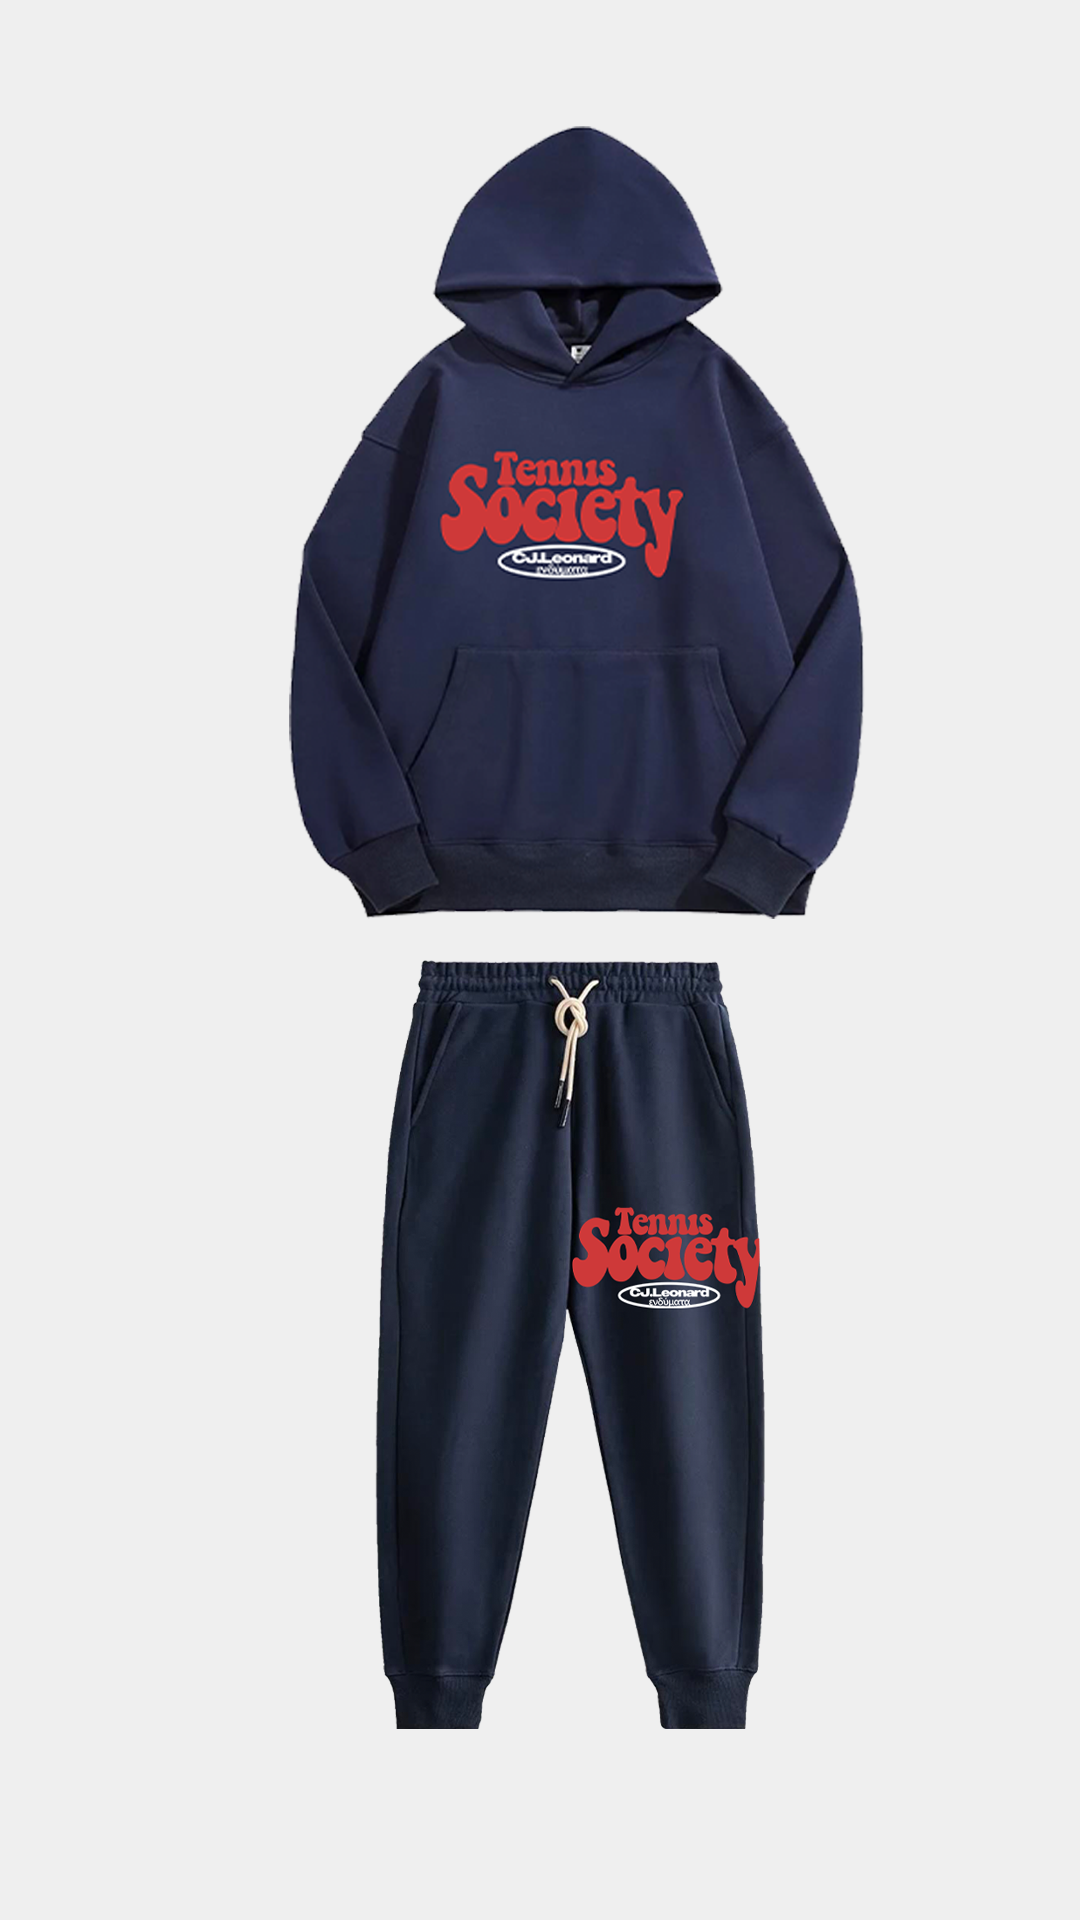 Navy Blue Tennis Society Sweatsuit